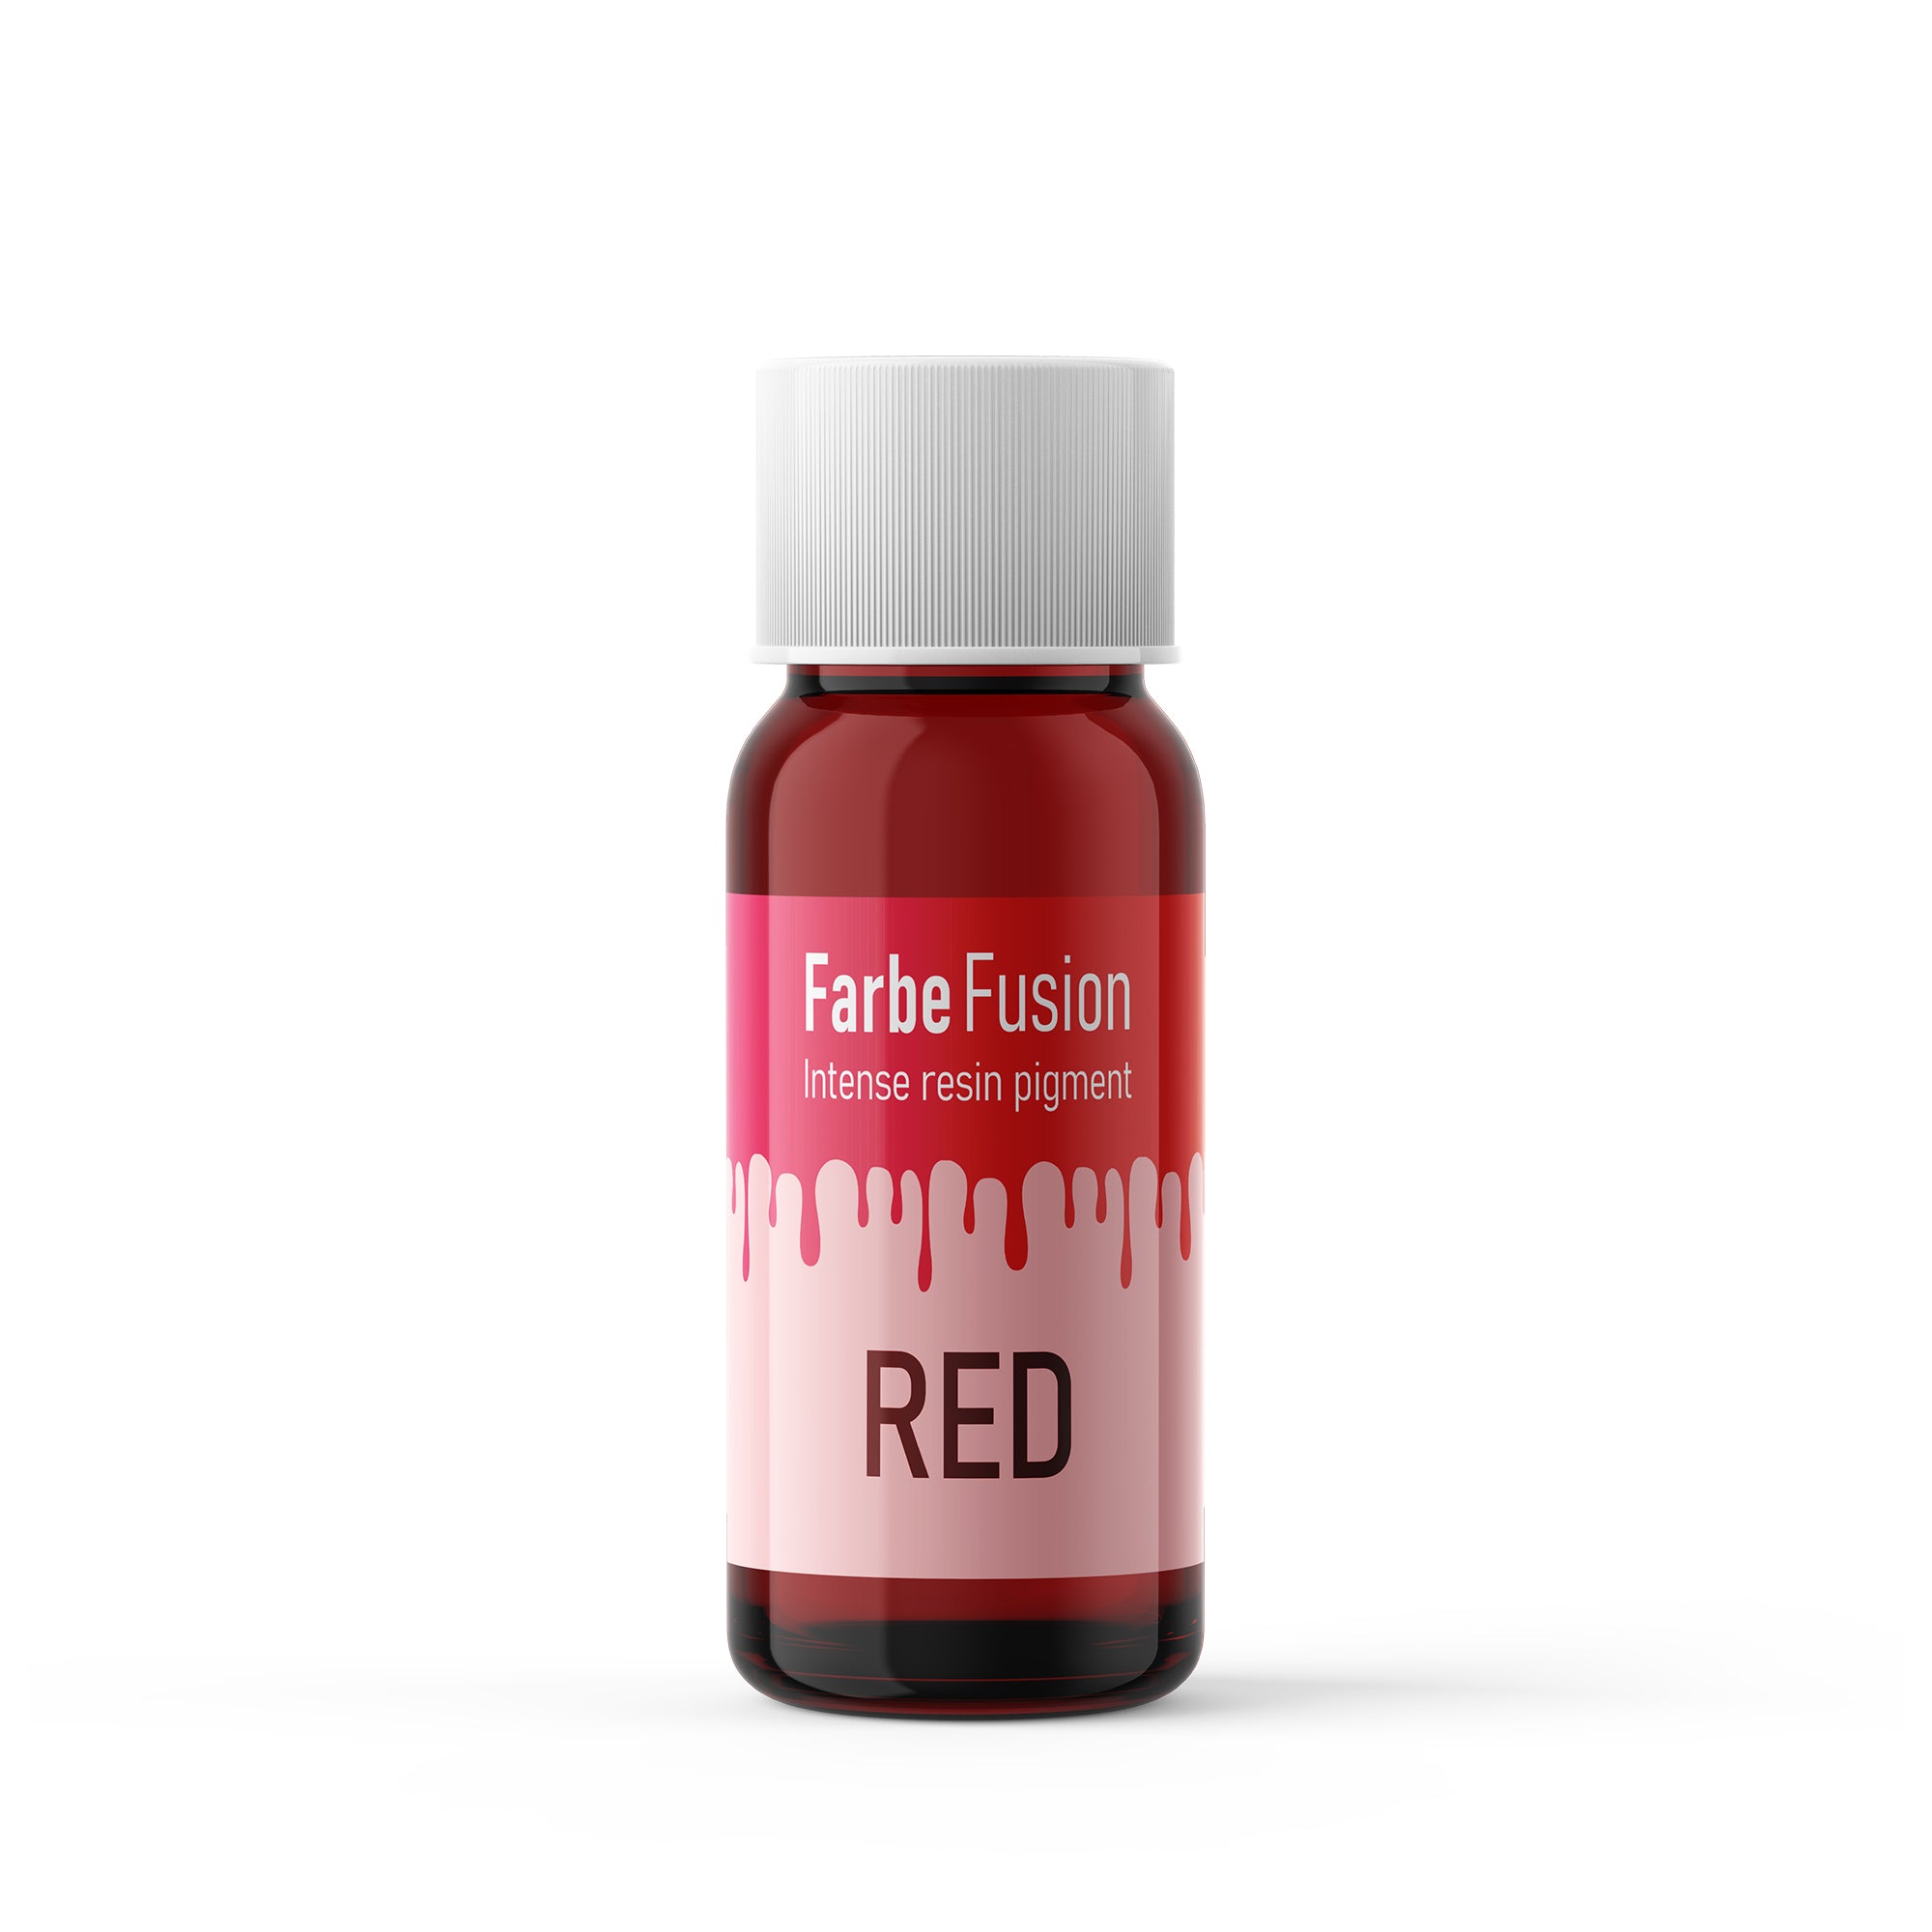 Woodberg - Farbe Fusion Red Resin Pigment | صبغة ريزن سائلة لون أحمر 35 مل 